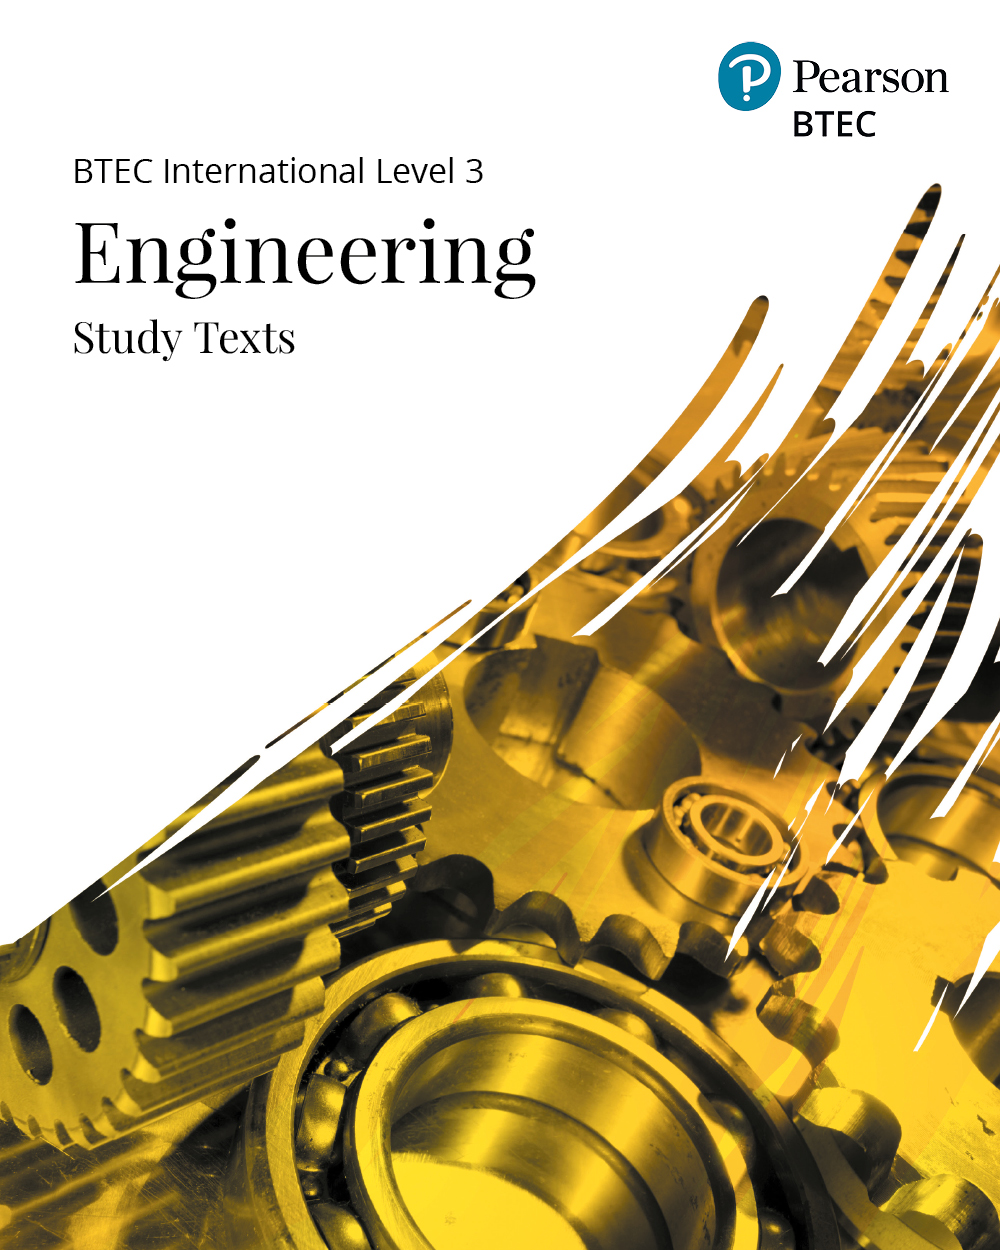 btec-international-l3-study text-engineering